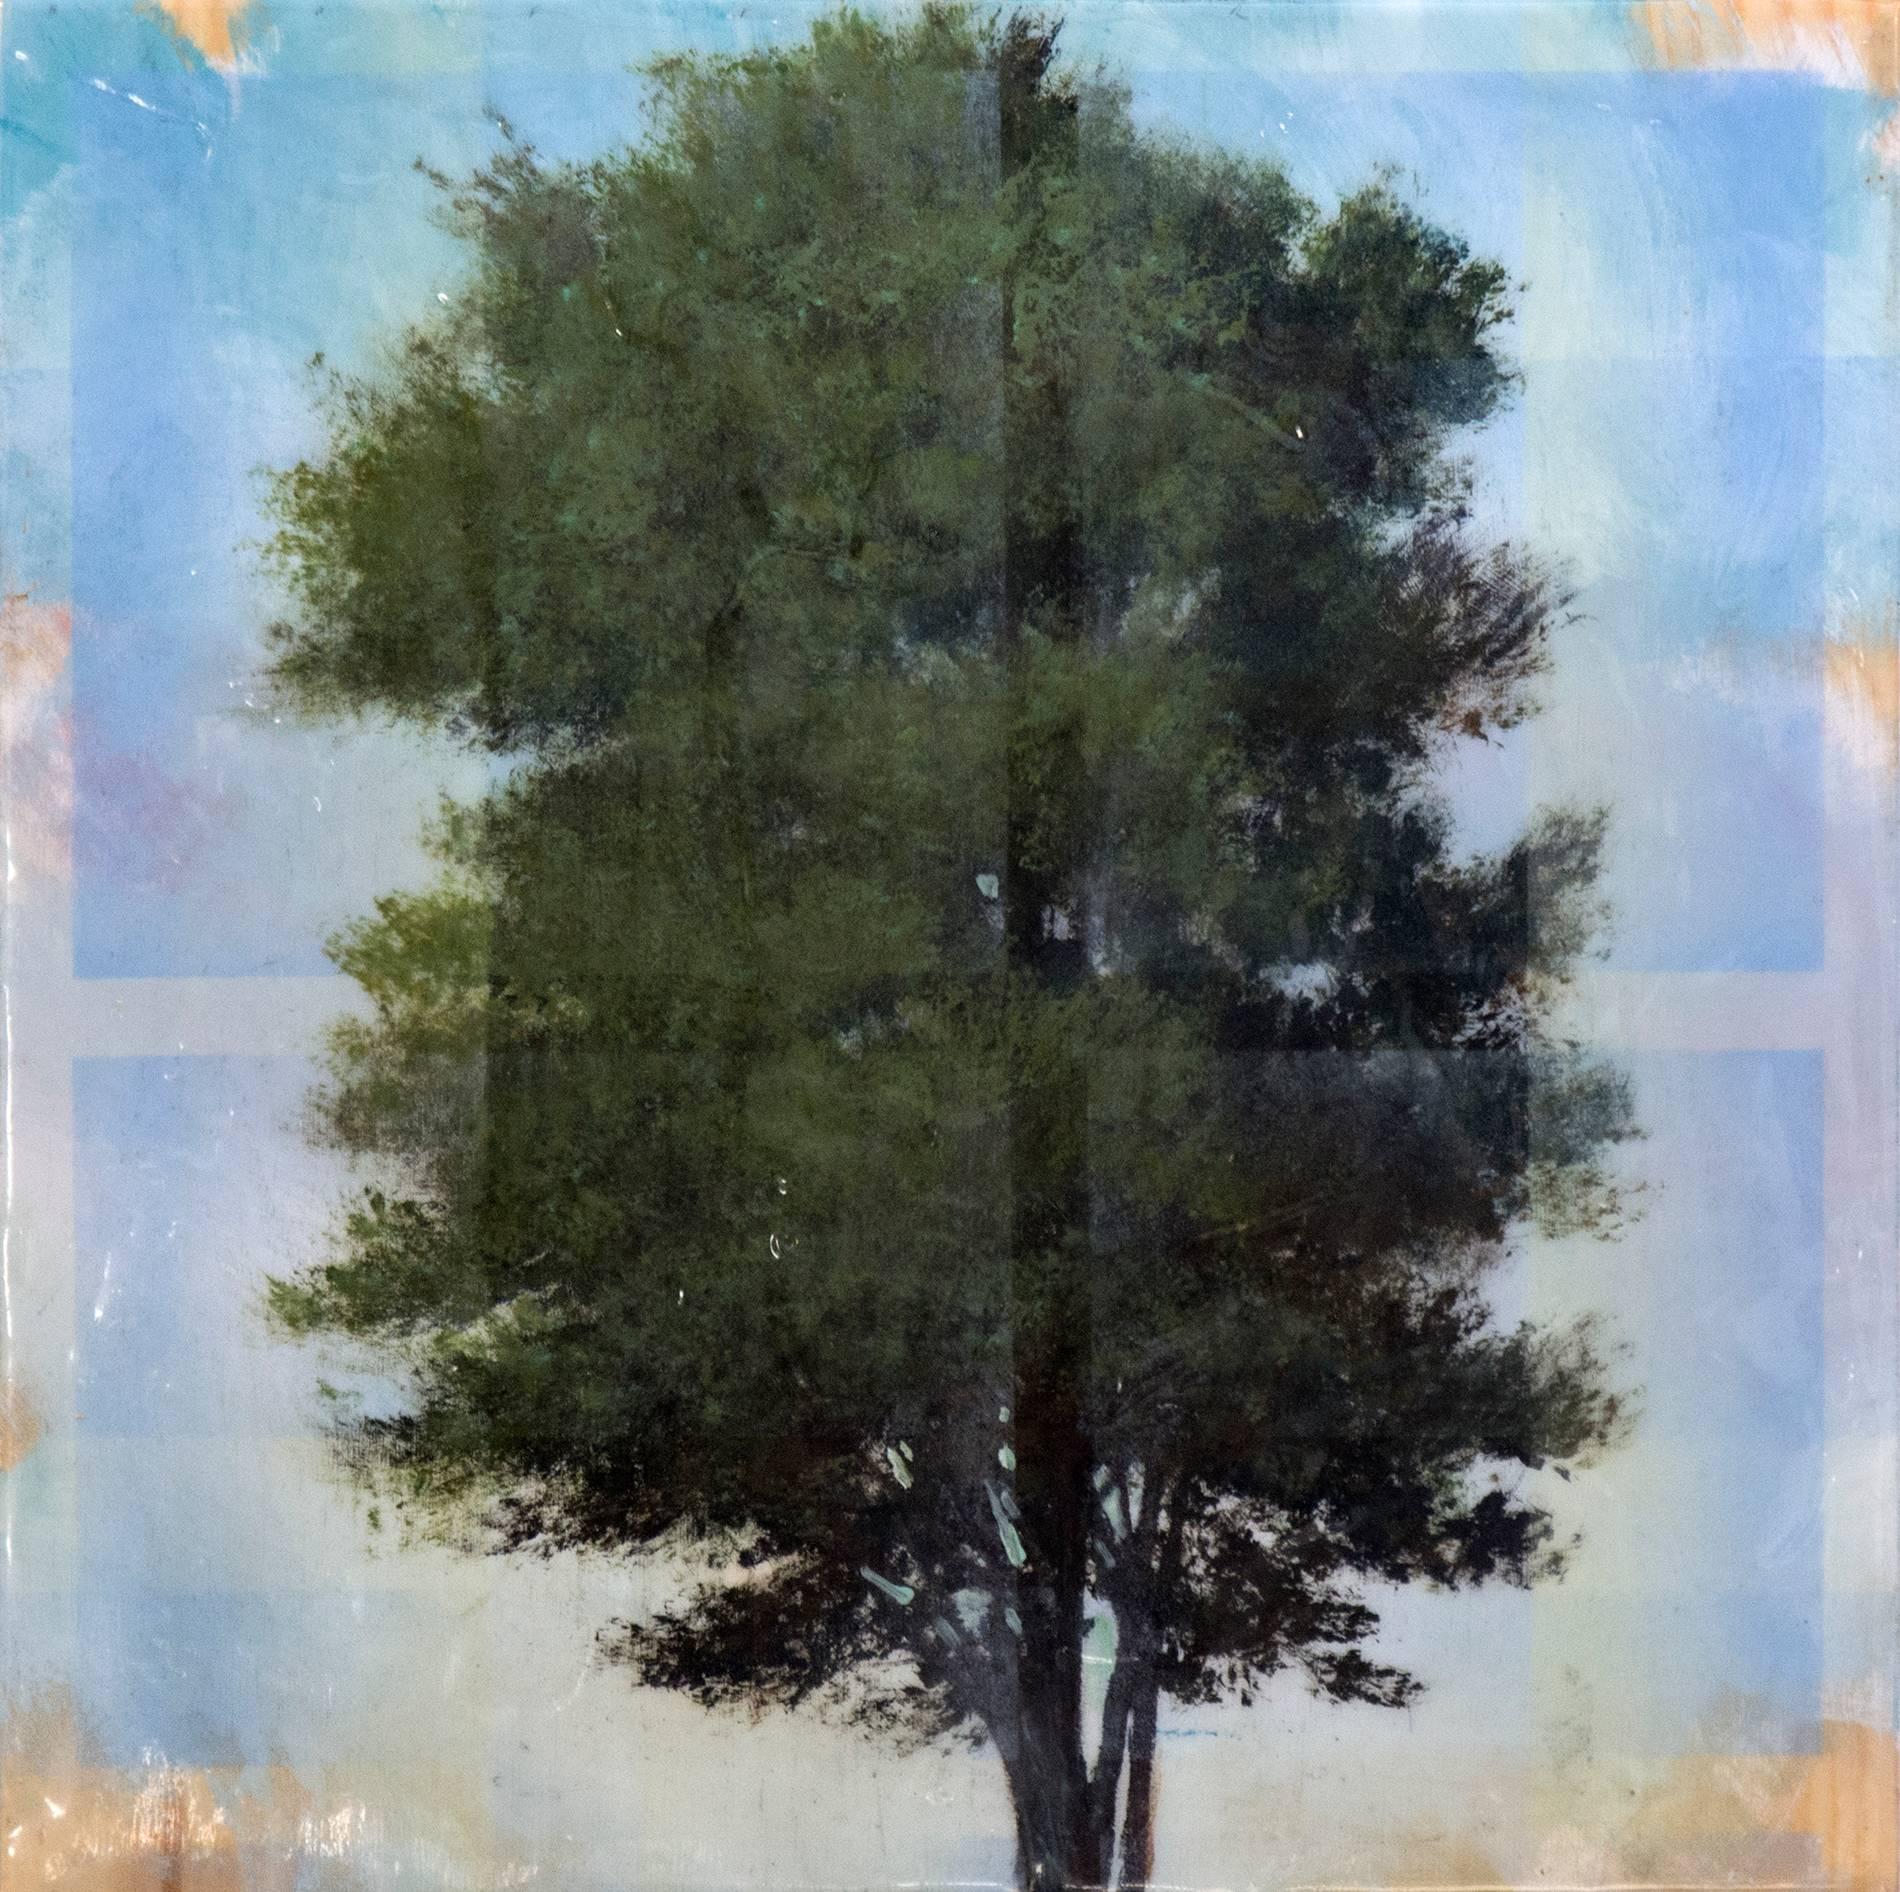 Peter Hoffer Landscape Painting - Tree Through Window Pane - blue, green, landscape, acrylic, resin on board